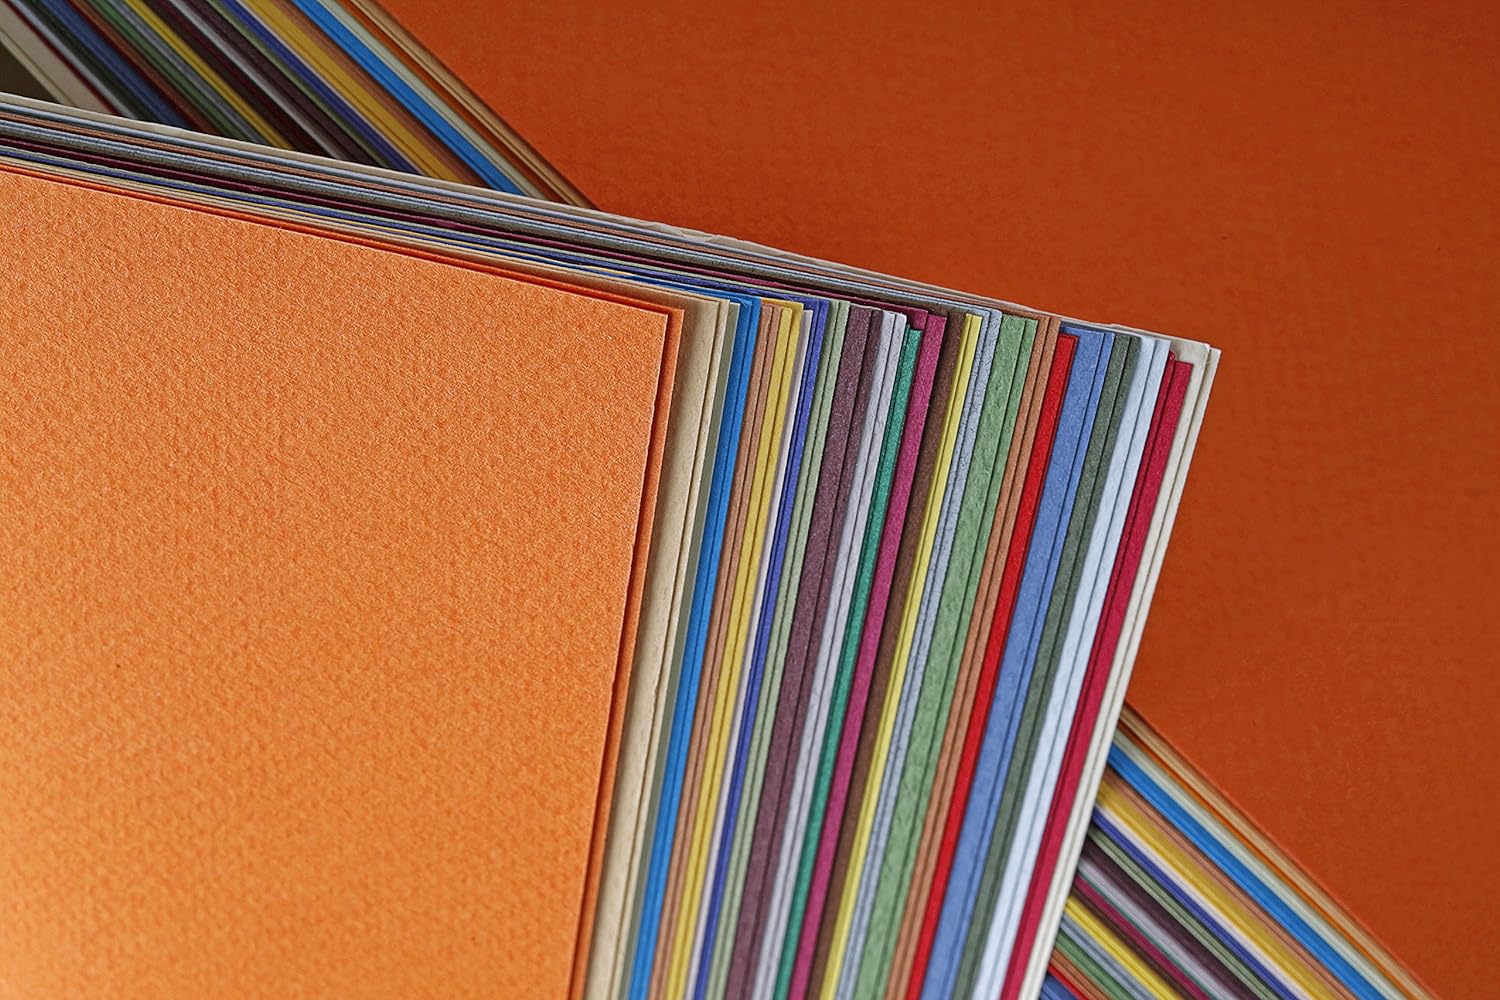 CLAIREFONTAINE Etival Coloured Paper 50x65cm 160g 24s Orange